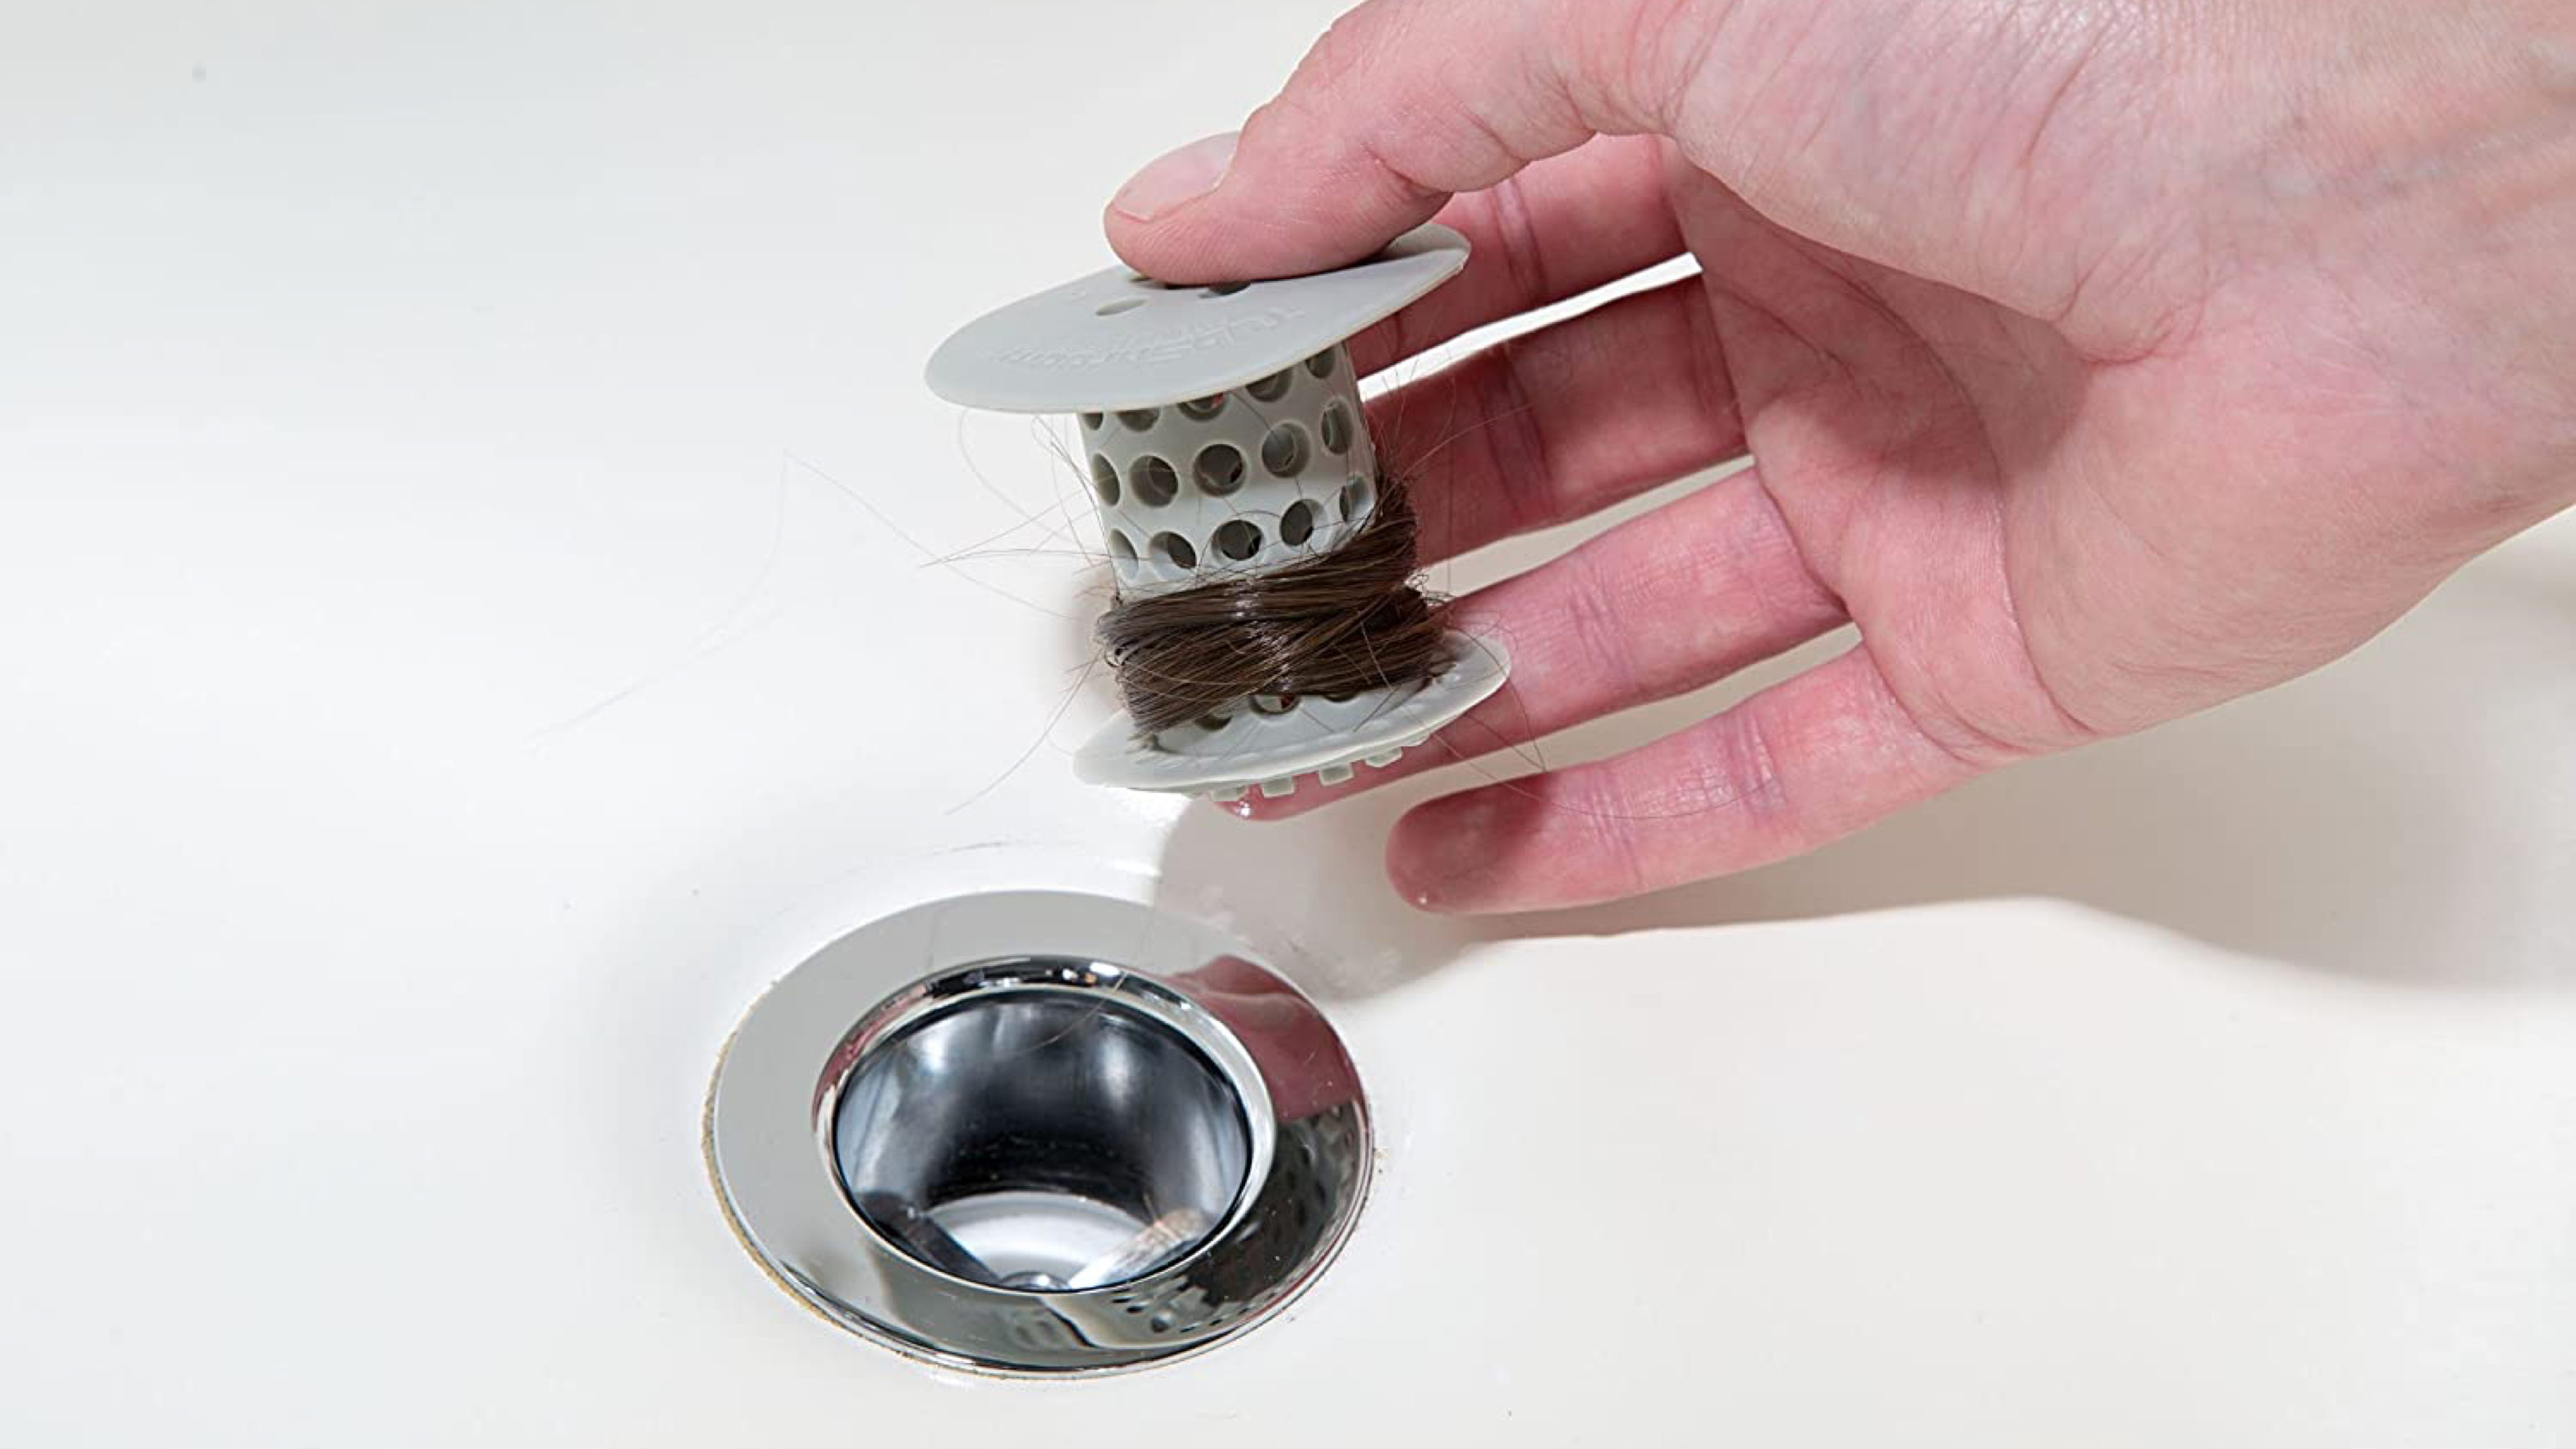 shower drain stopper to prevent hair clogs